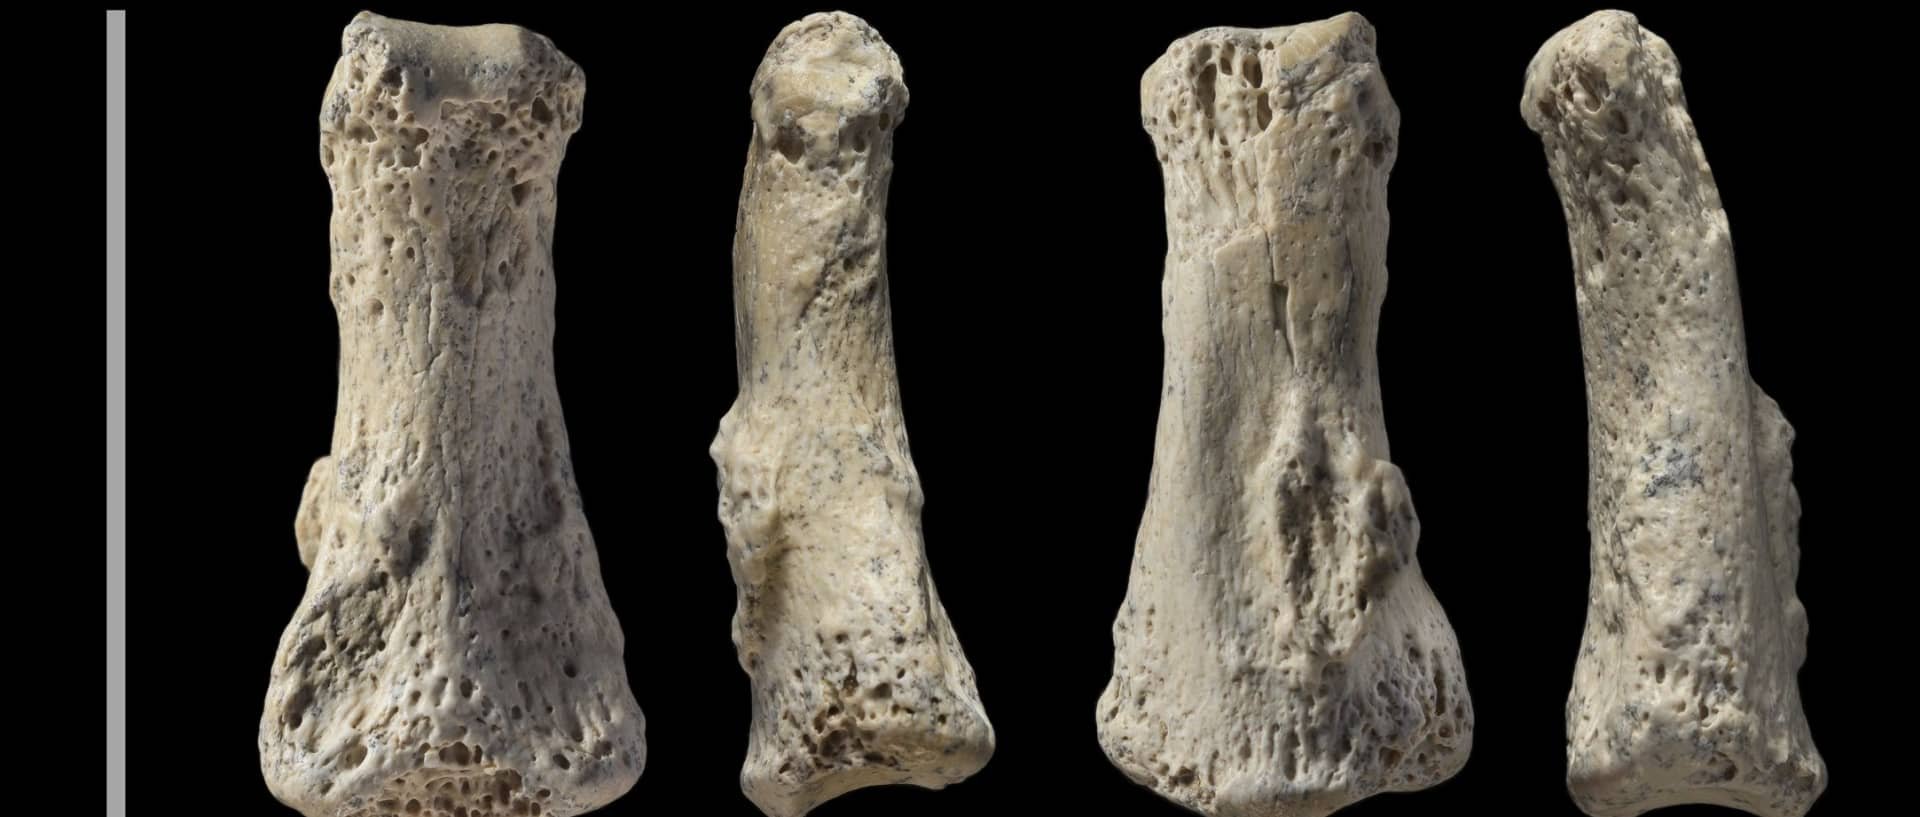 Antigo fóssil humano